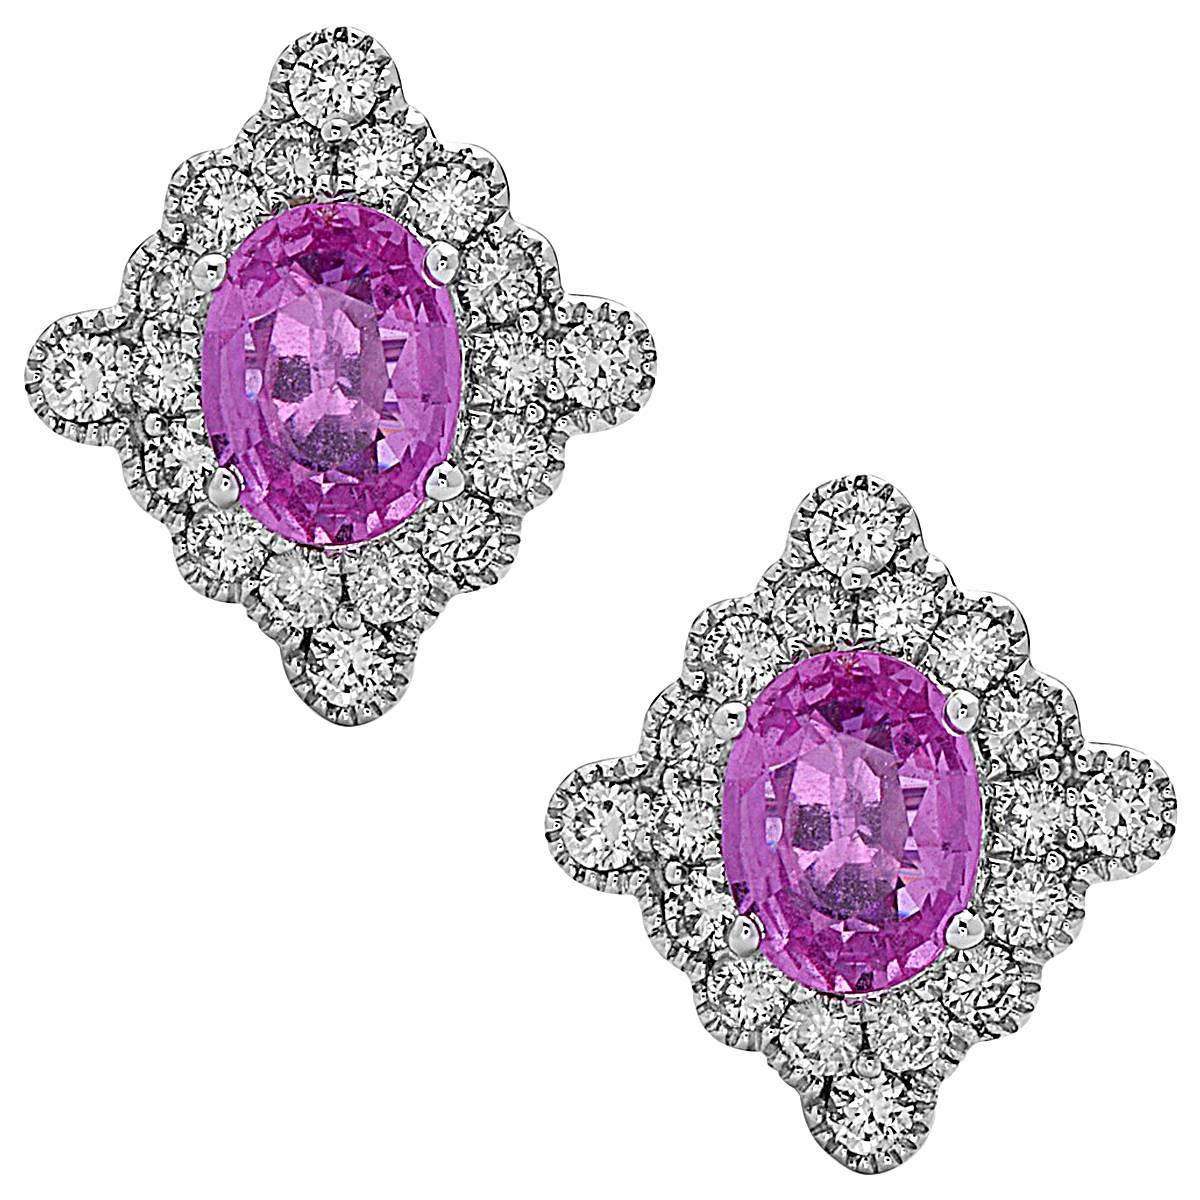 Stunning Pink Sapphire Diamond Gold Stud earrings